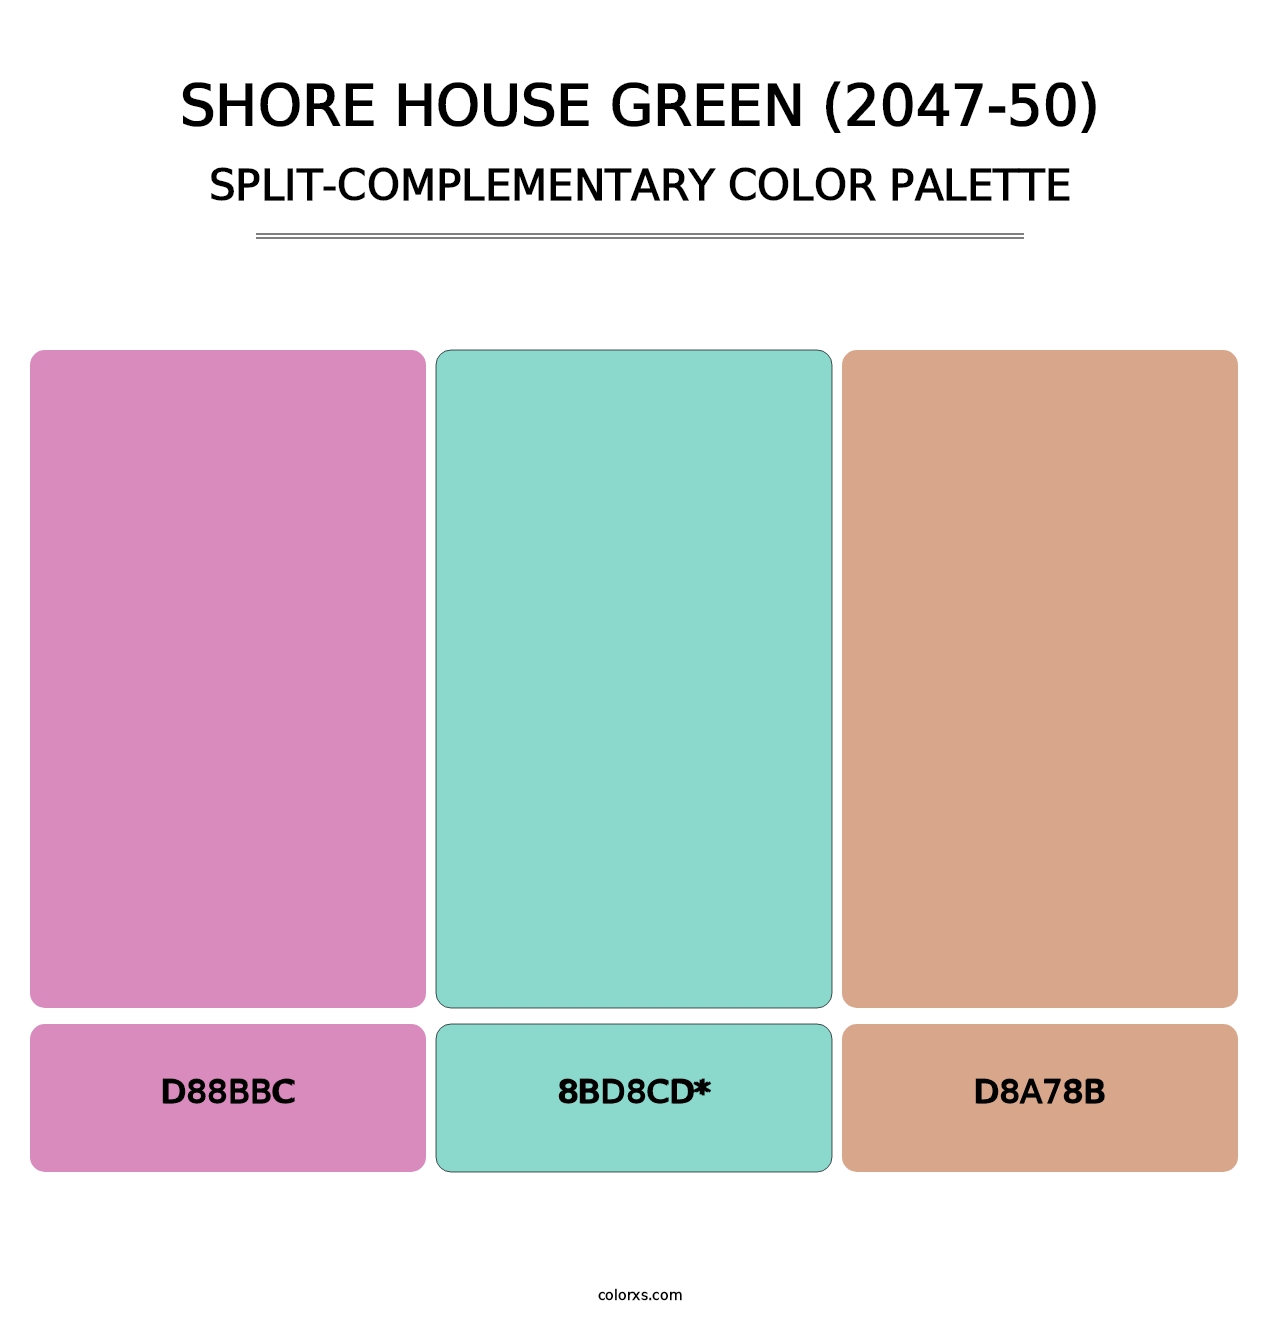 Shore House Green (2047-50) - Split-Complementary Color Palette